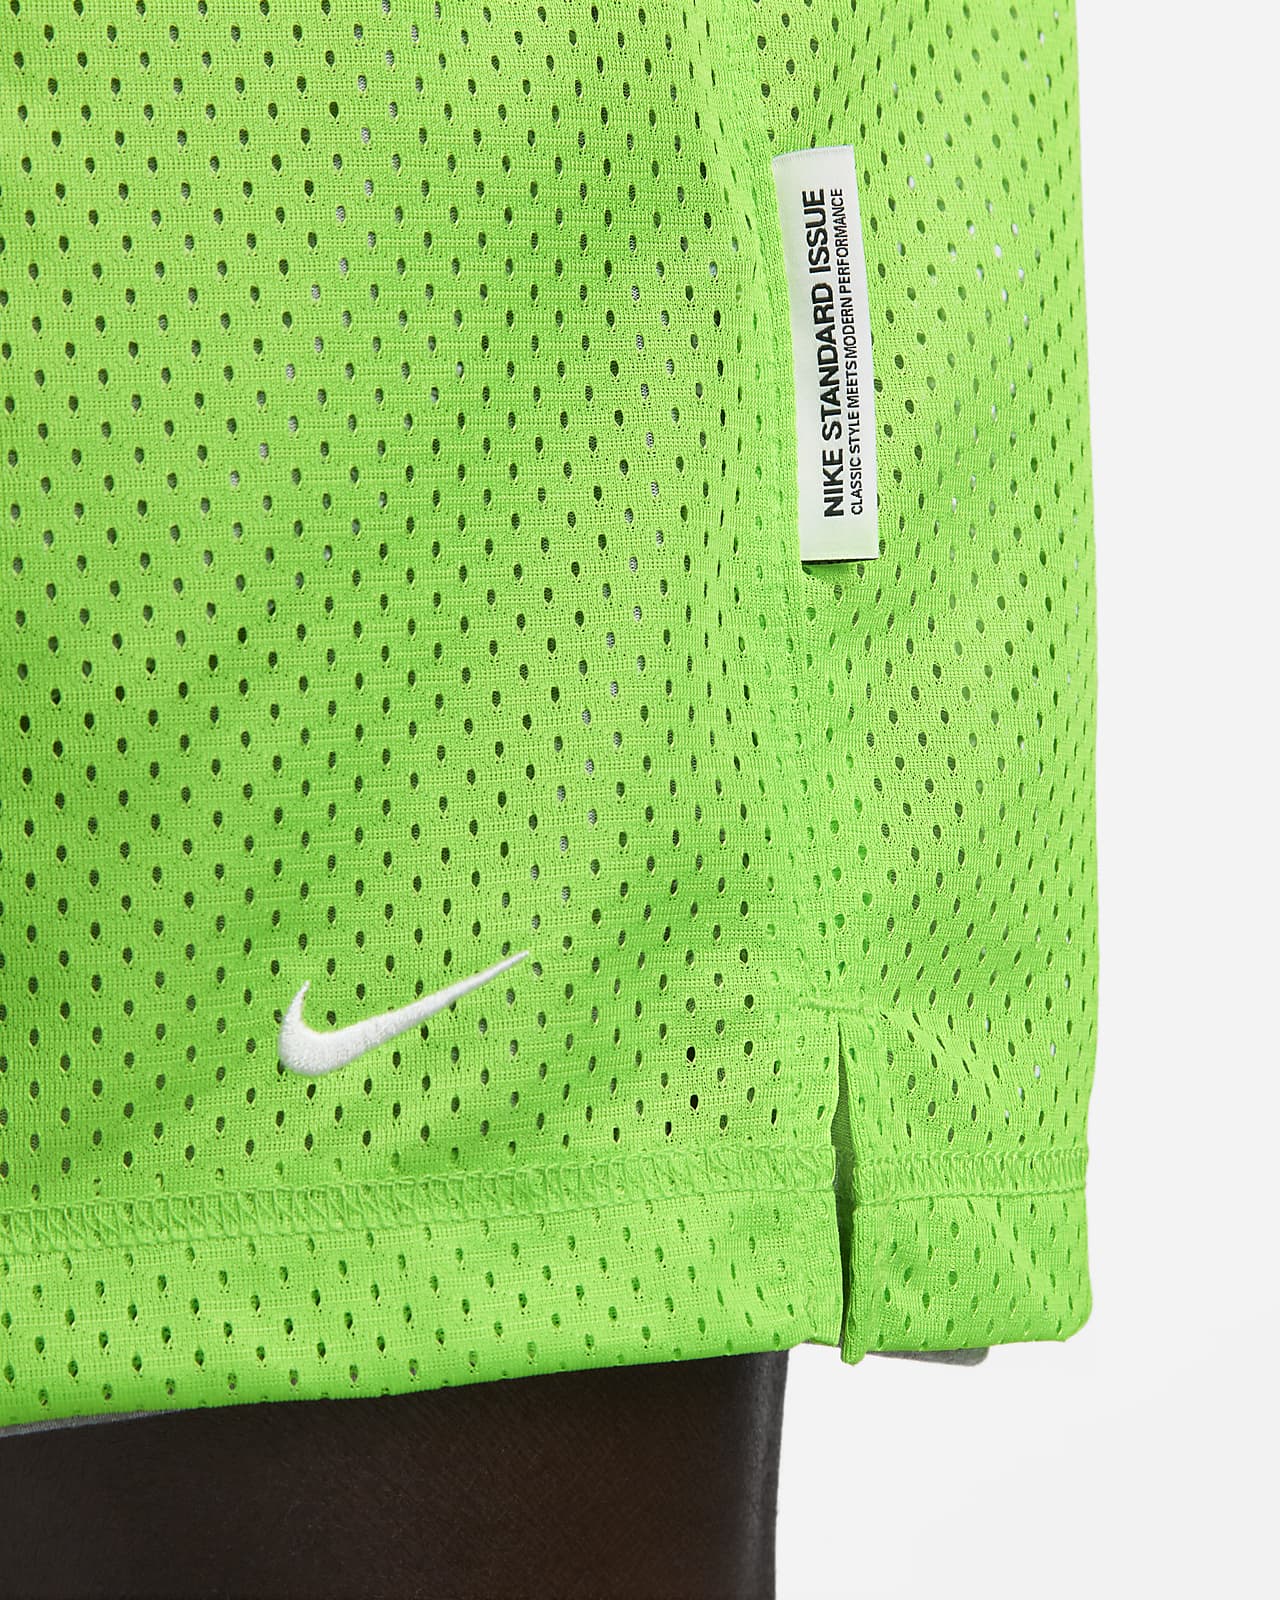 Team 31 Standard Issue Men's Nike Dri-FIT NBA Reversible Shorts